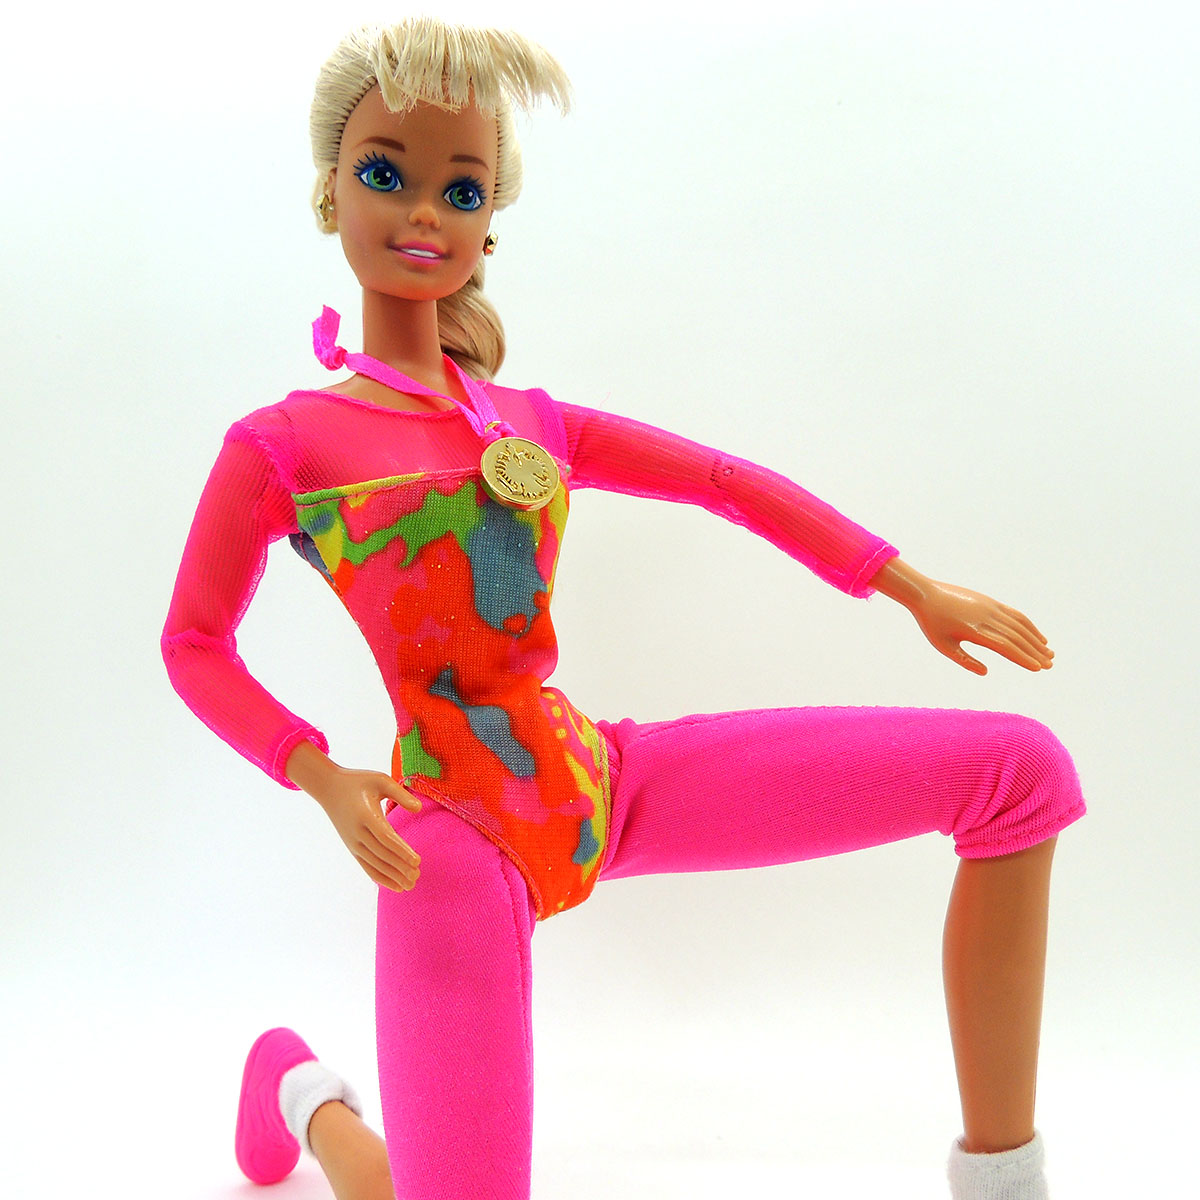 Barbie gymnaste 1993